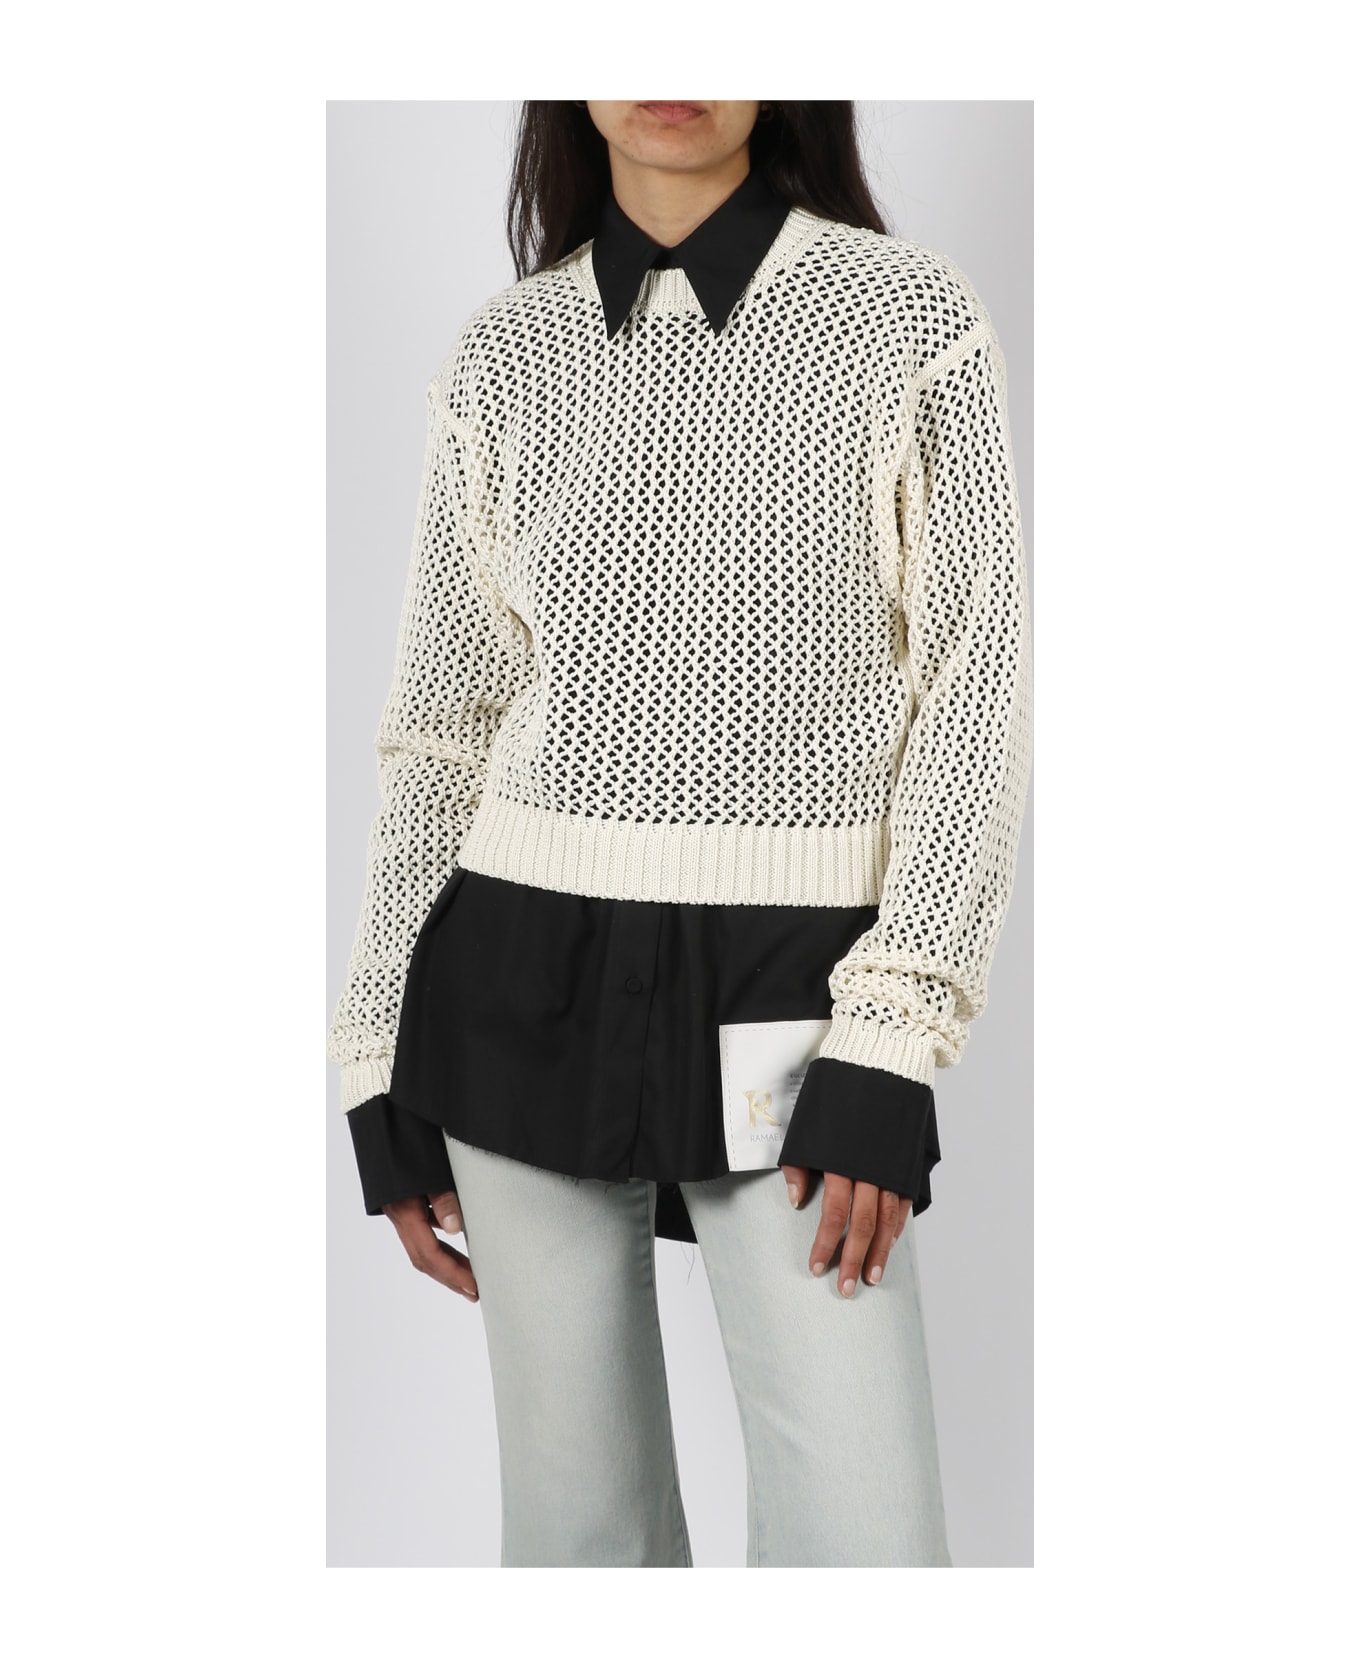 Ramael Bio Cable Crewneck Sweater - White